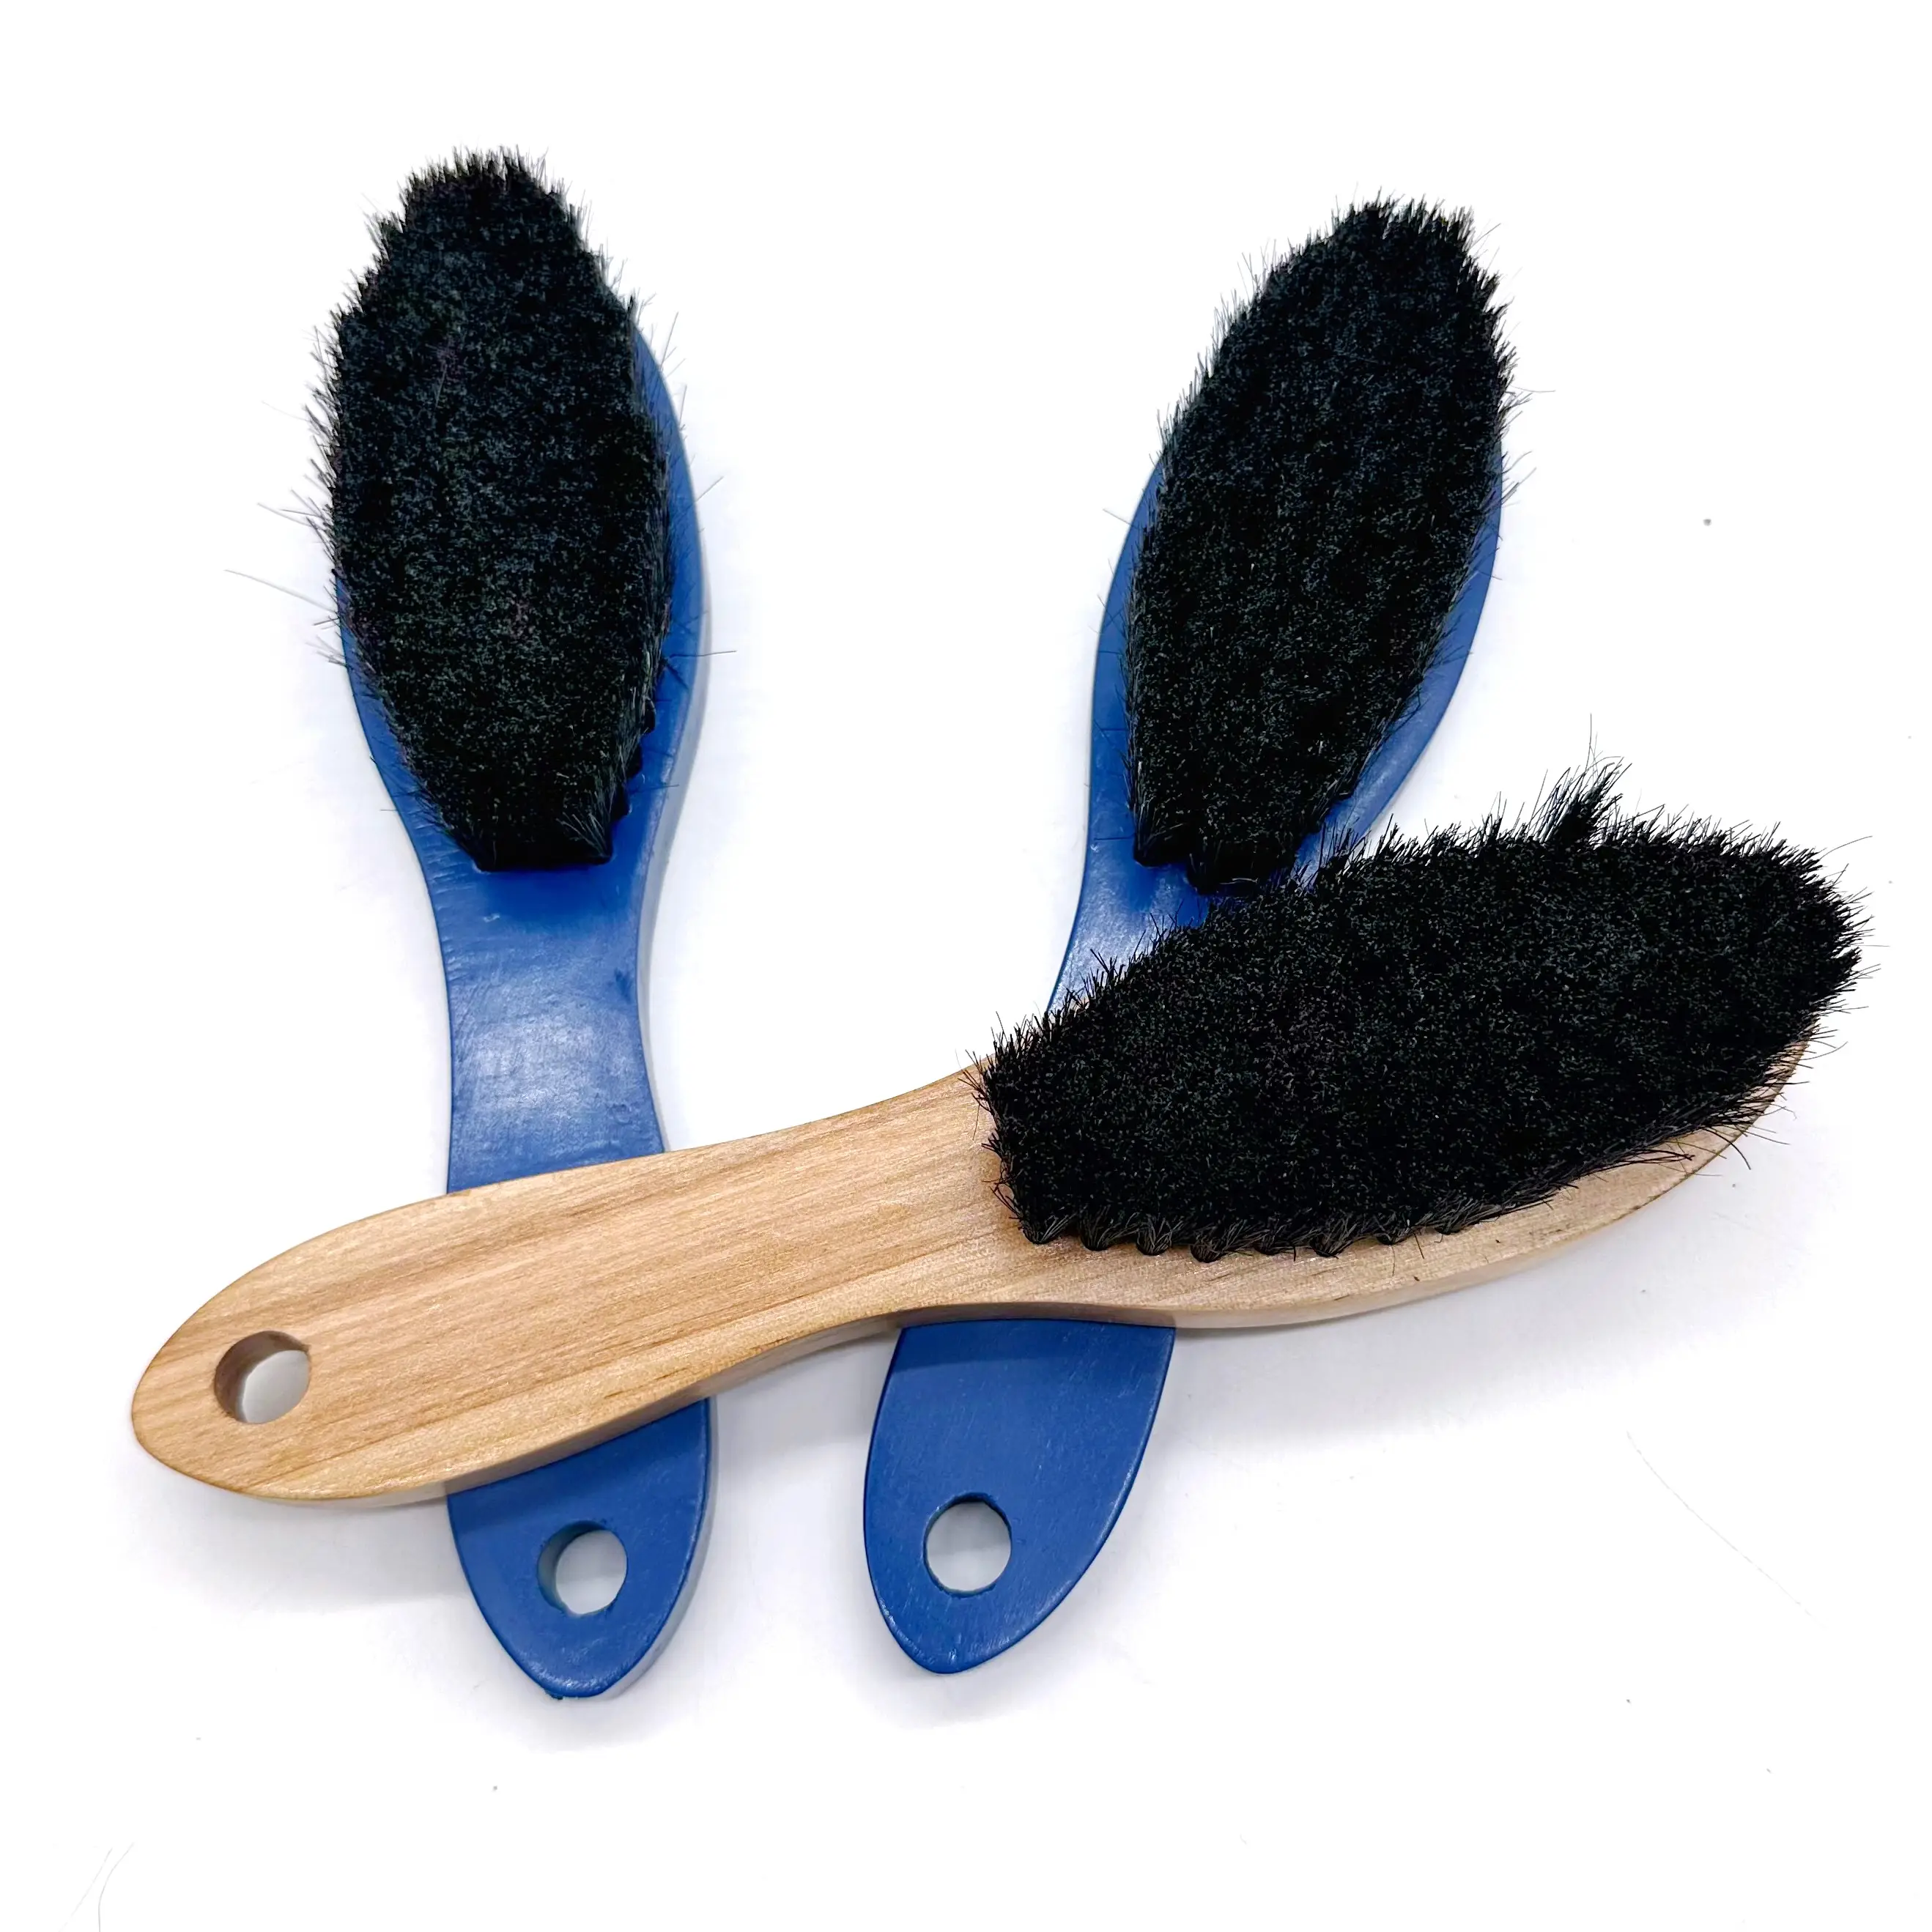 Customized horse hair brush, leather cleaning polishing brush, multifunctional blue wooden handle horsehair brush